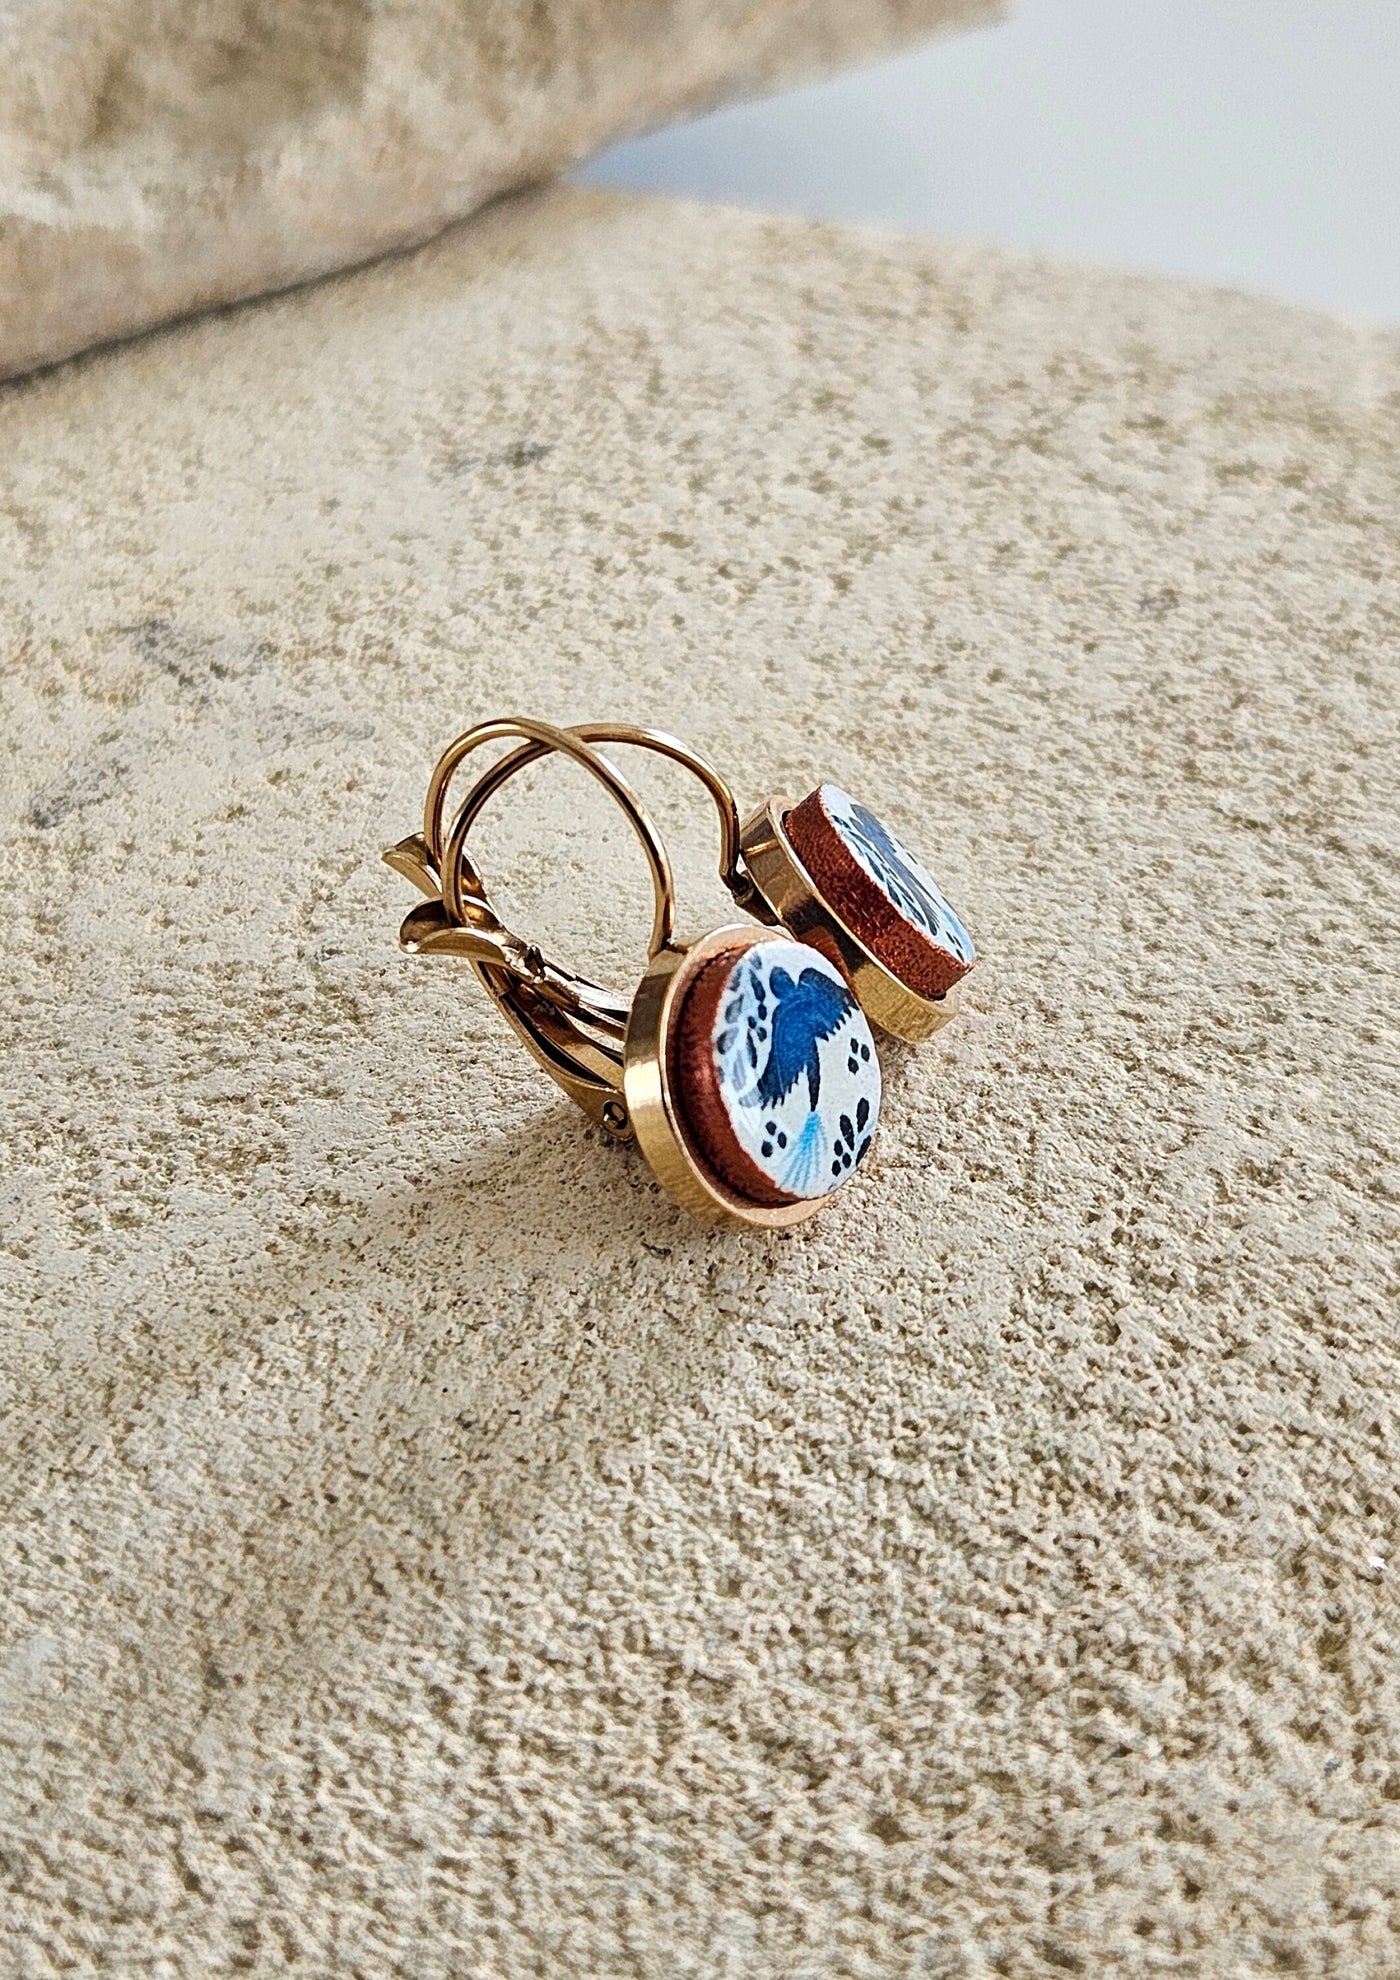 Mexican Blue Dove Tile Earrings Talavera Rose Gold STEEL Blue Drop Earrings Lightweight Rose Gold Hoops Soulmate Gift Spanish Tile Jewelry